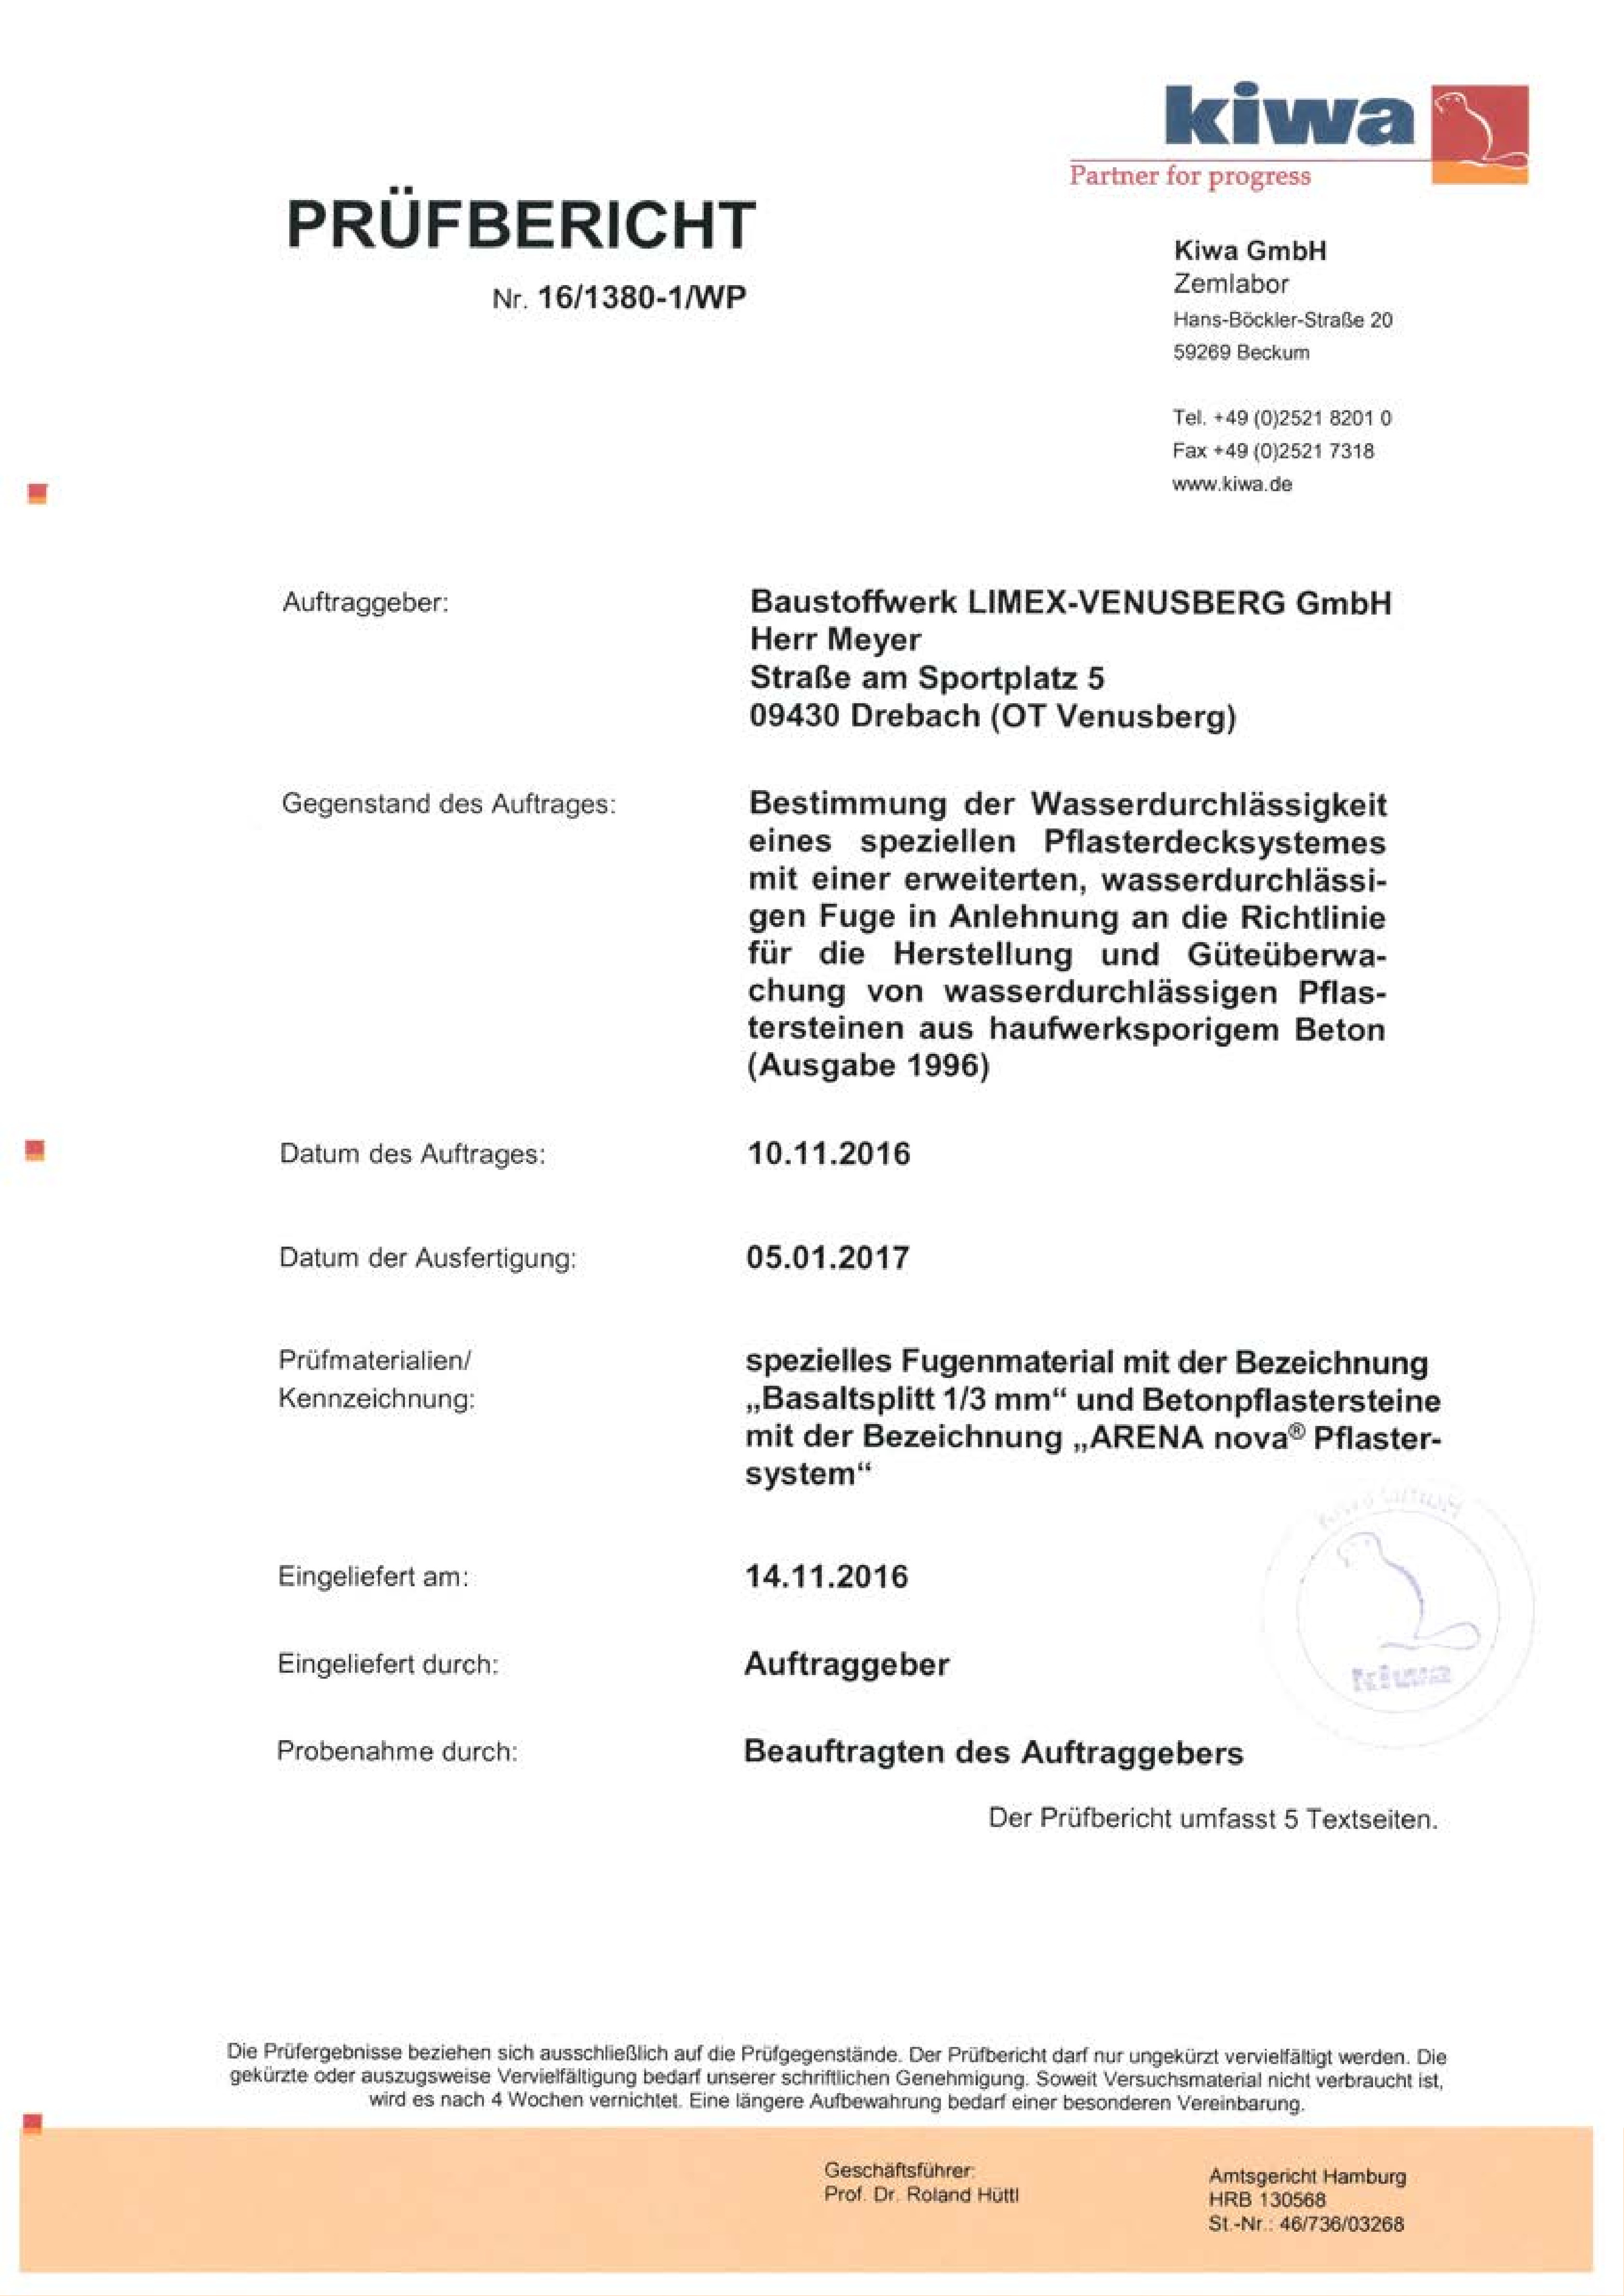 LIMEX Infocenter Pruefzeugnis 16 1380 1 WP ArenaNovaPflastersystem Antik pdf